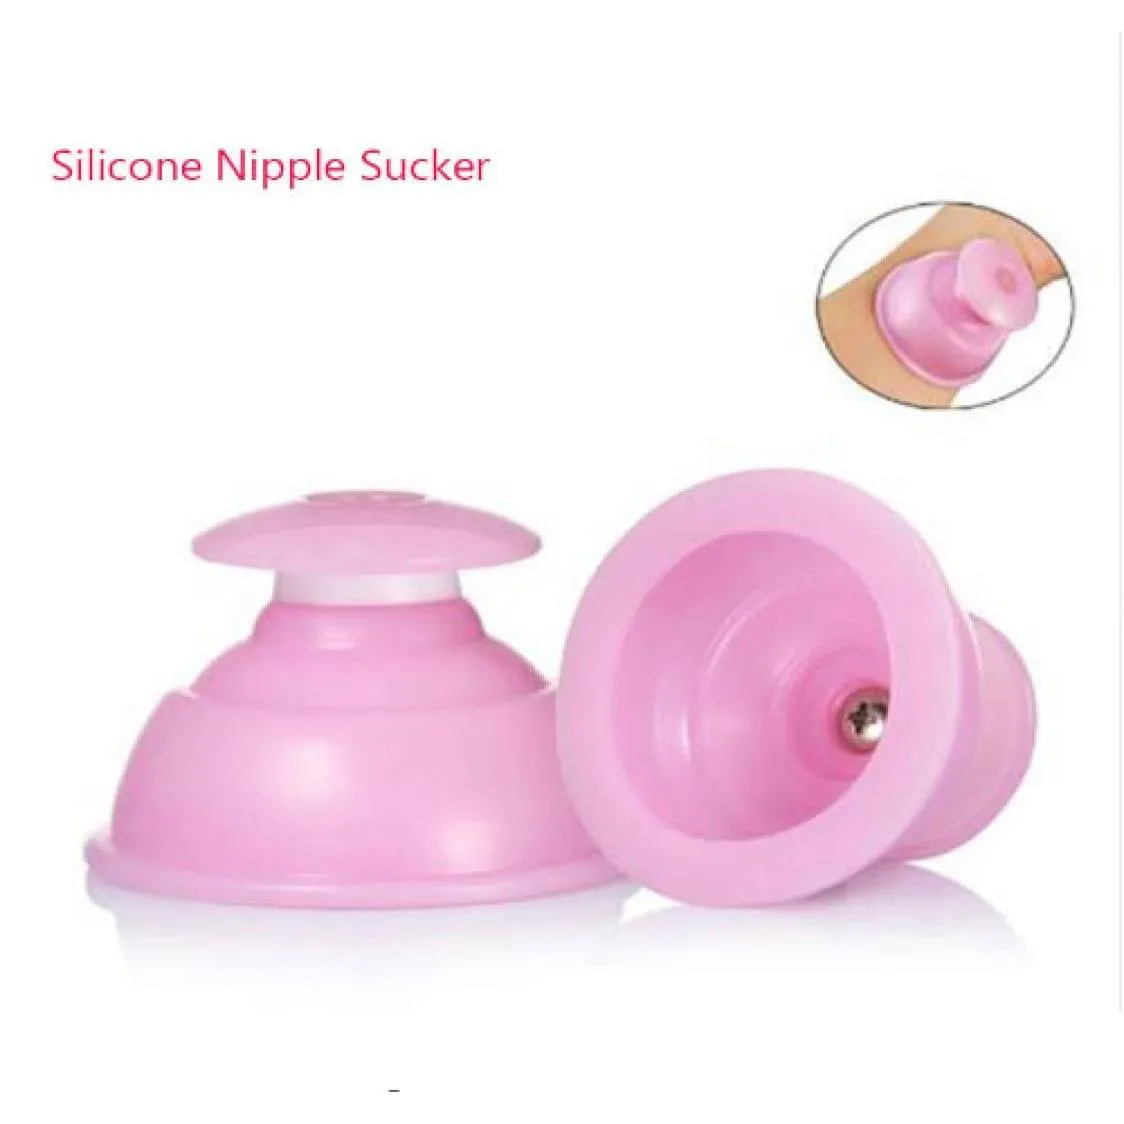 Full Body Massager Erotic Toys Sile Nipple Breast Pump Mas Vacuum Suction Clitoris Clamp Bdsm Female Toys6230961 Drop Delivery Health Otxg5